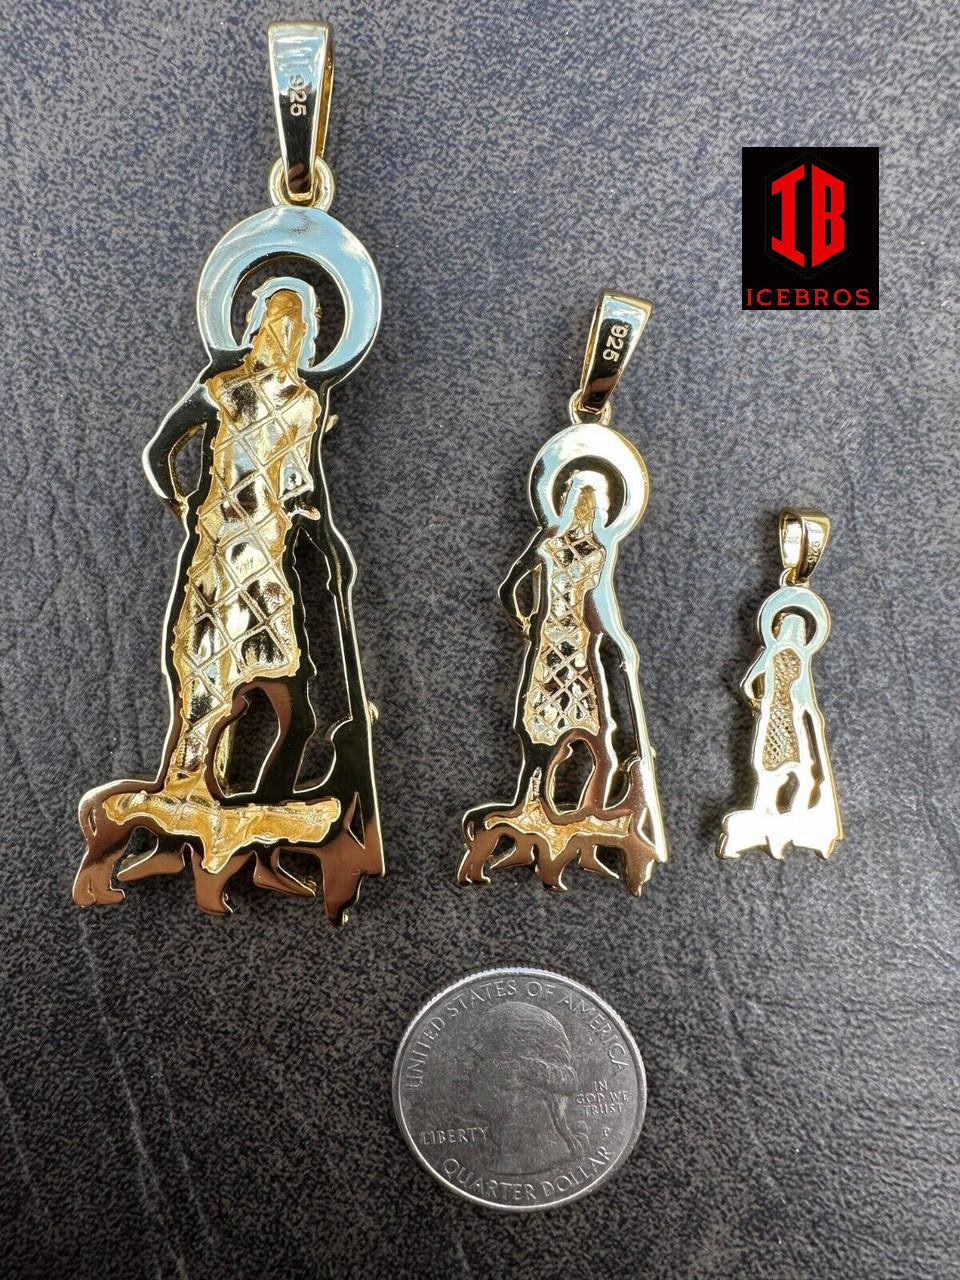 SAINT St LAZARUS Charm Necklace, 14K Gold over 925 Silver San Lazaro PENDANT, Religious Jewelry for Men & Women, Gift Pendant For Unisex